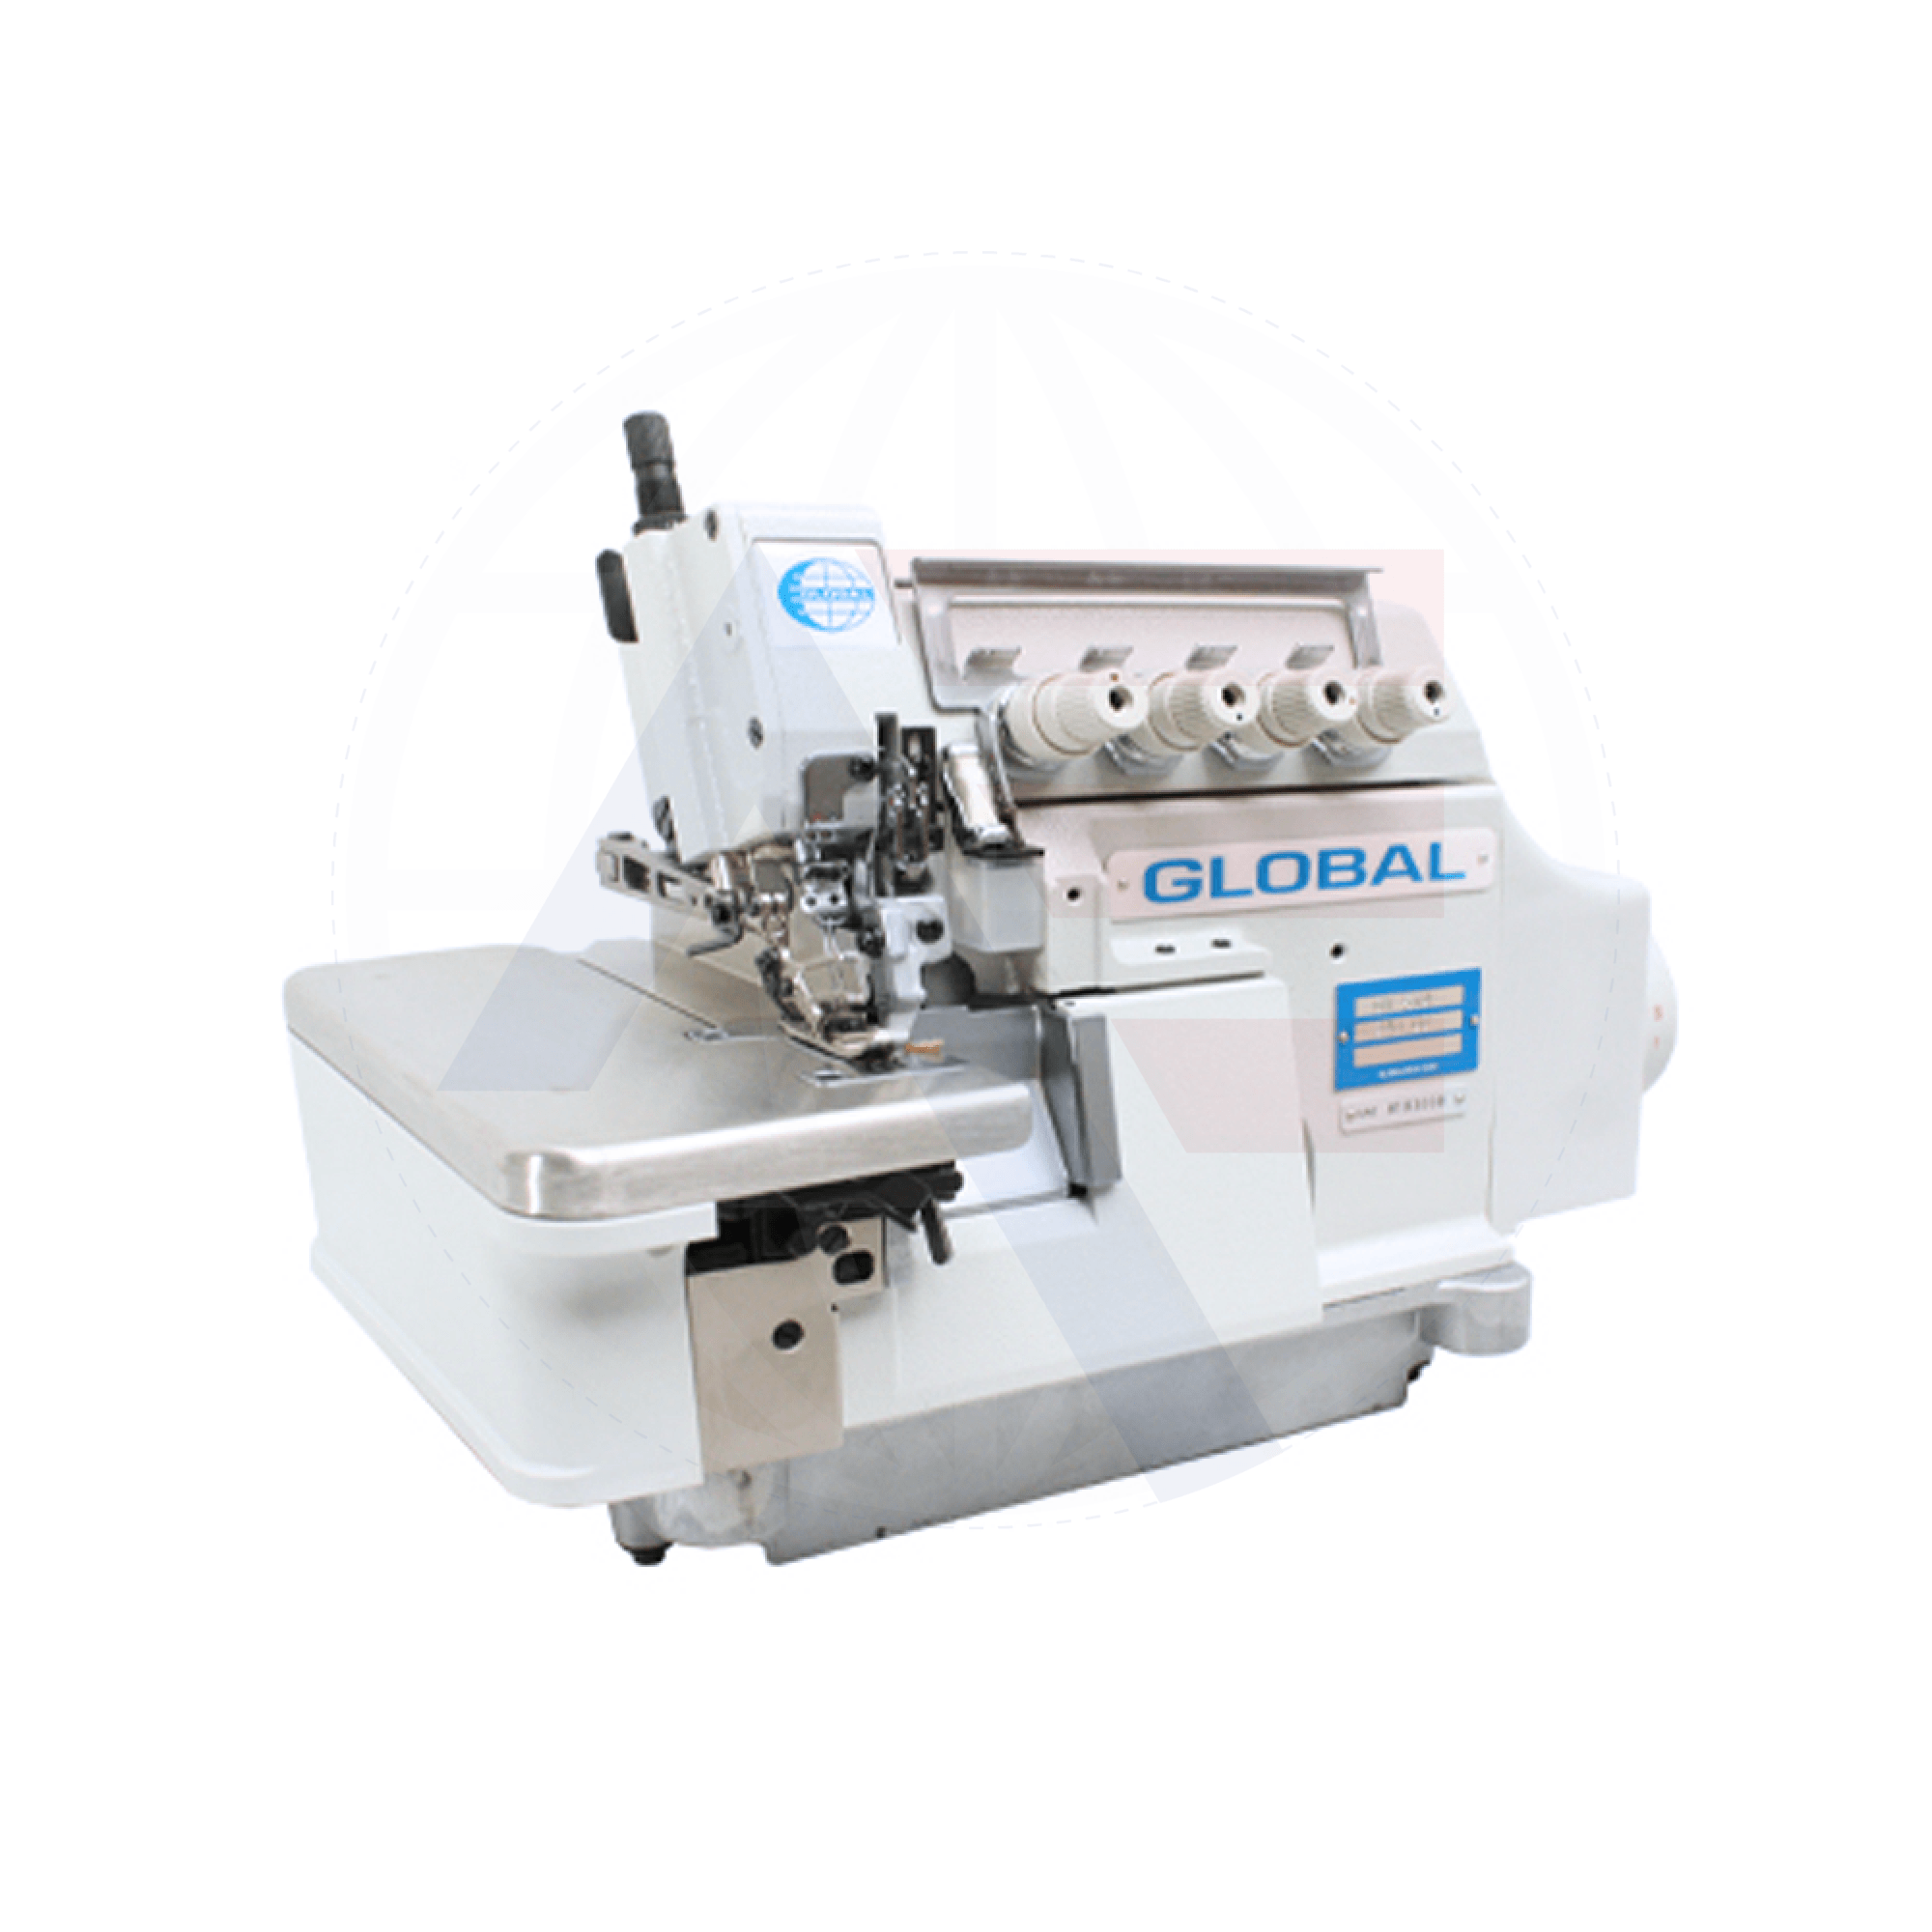 Global Ov 500 Dd Series Overlock Machine Sewing Machines